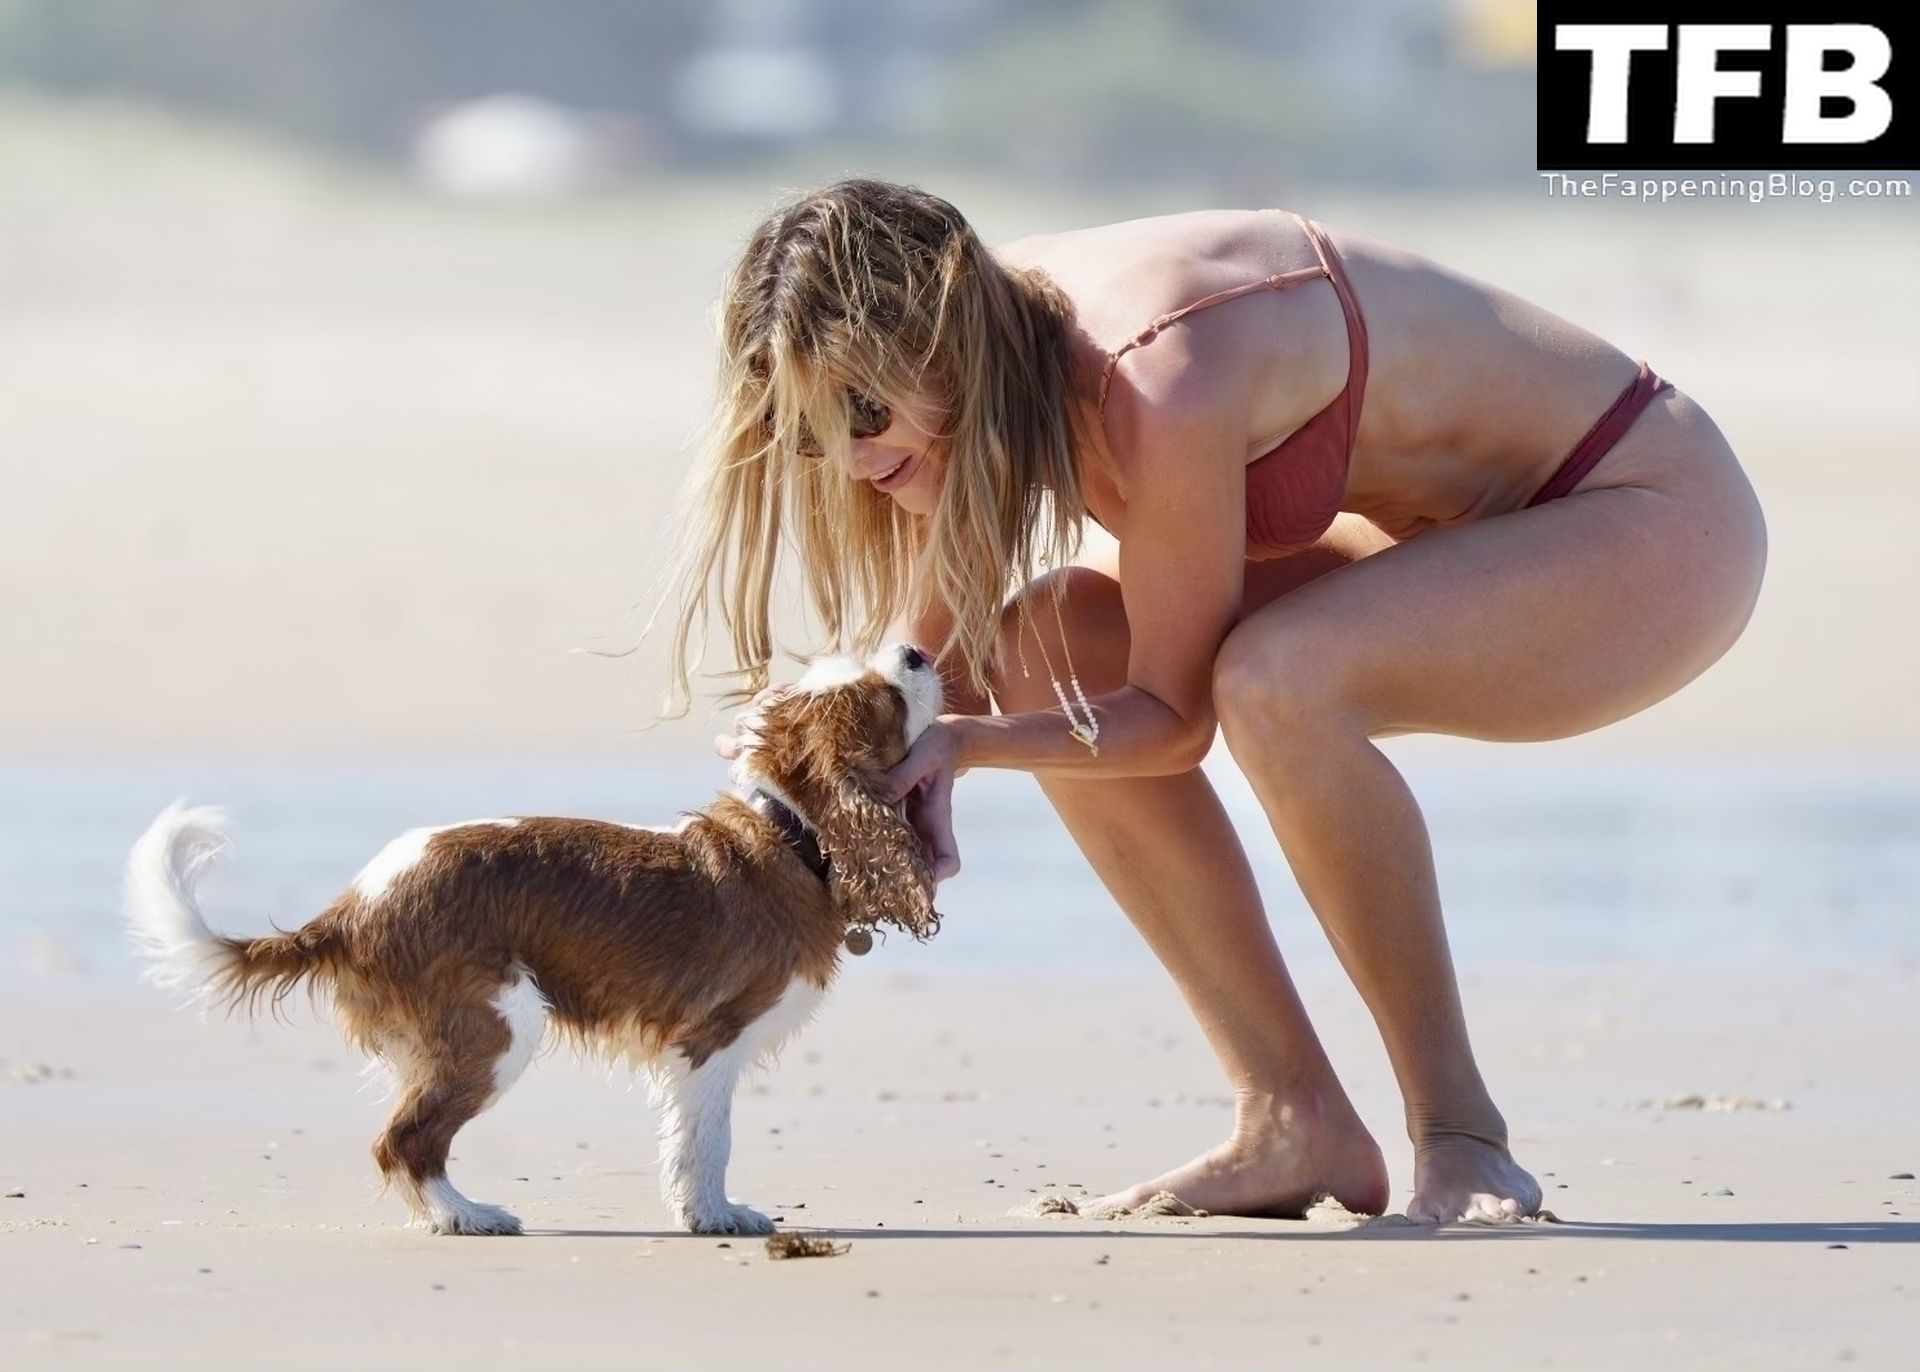 Megan Marx Shows Off Her Sexy Bikini Body on the Beach (20 Photos)